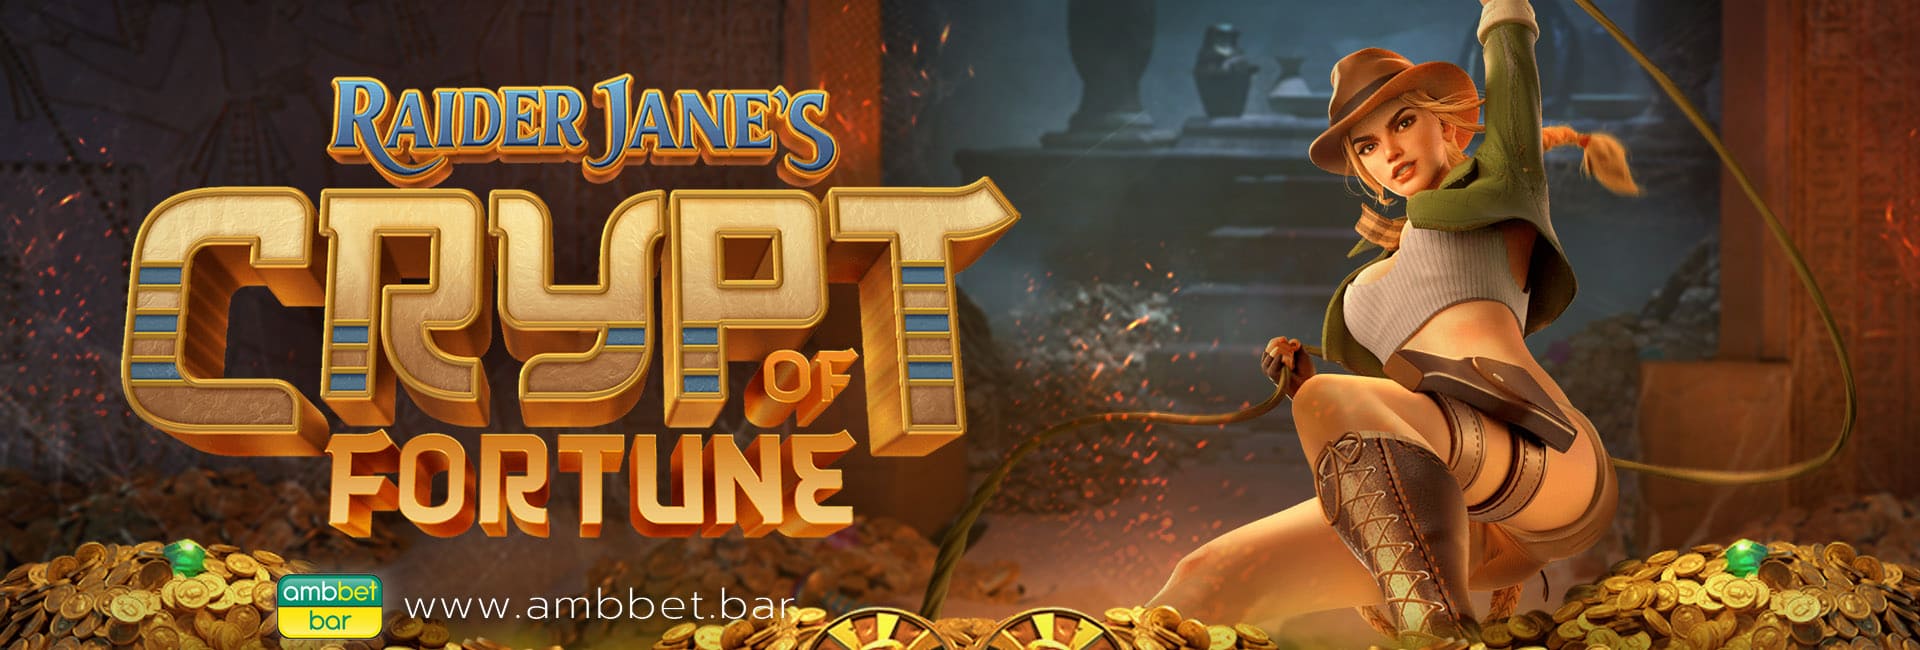 Raider Jane's Crypt of Fortune banner